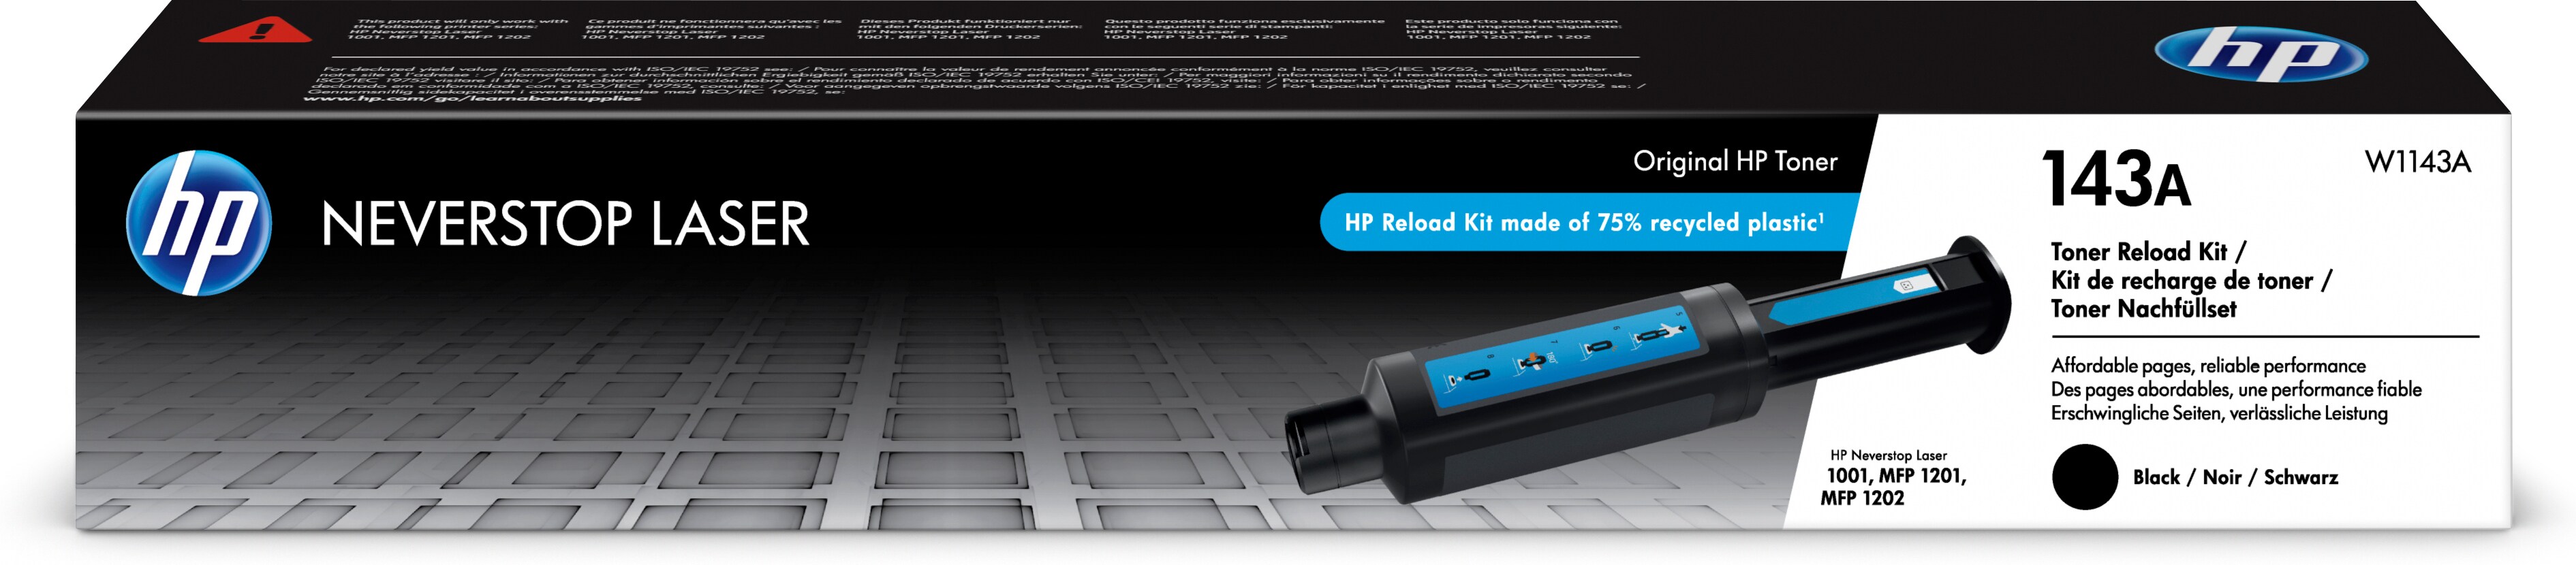 HP 143A Reload Kit ricarica toner Neverstop 1001